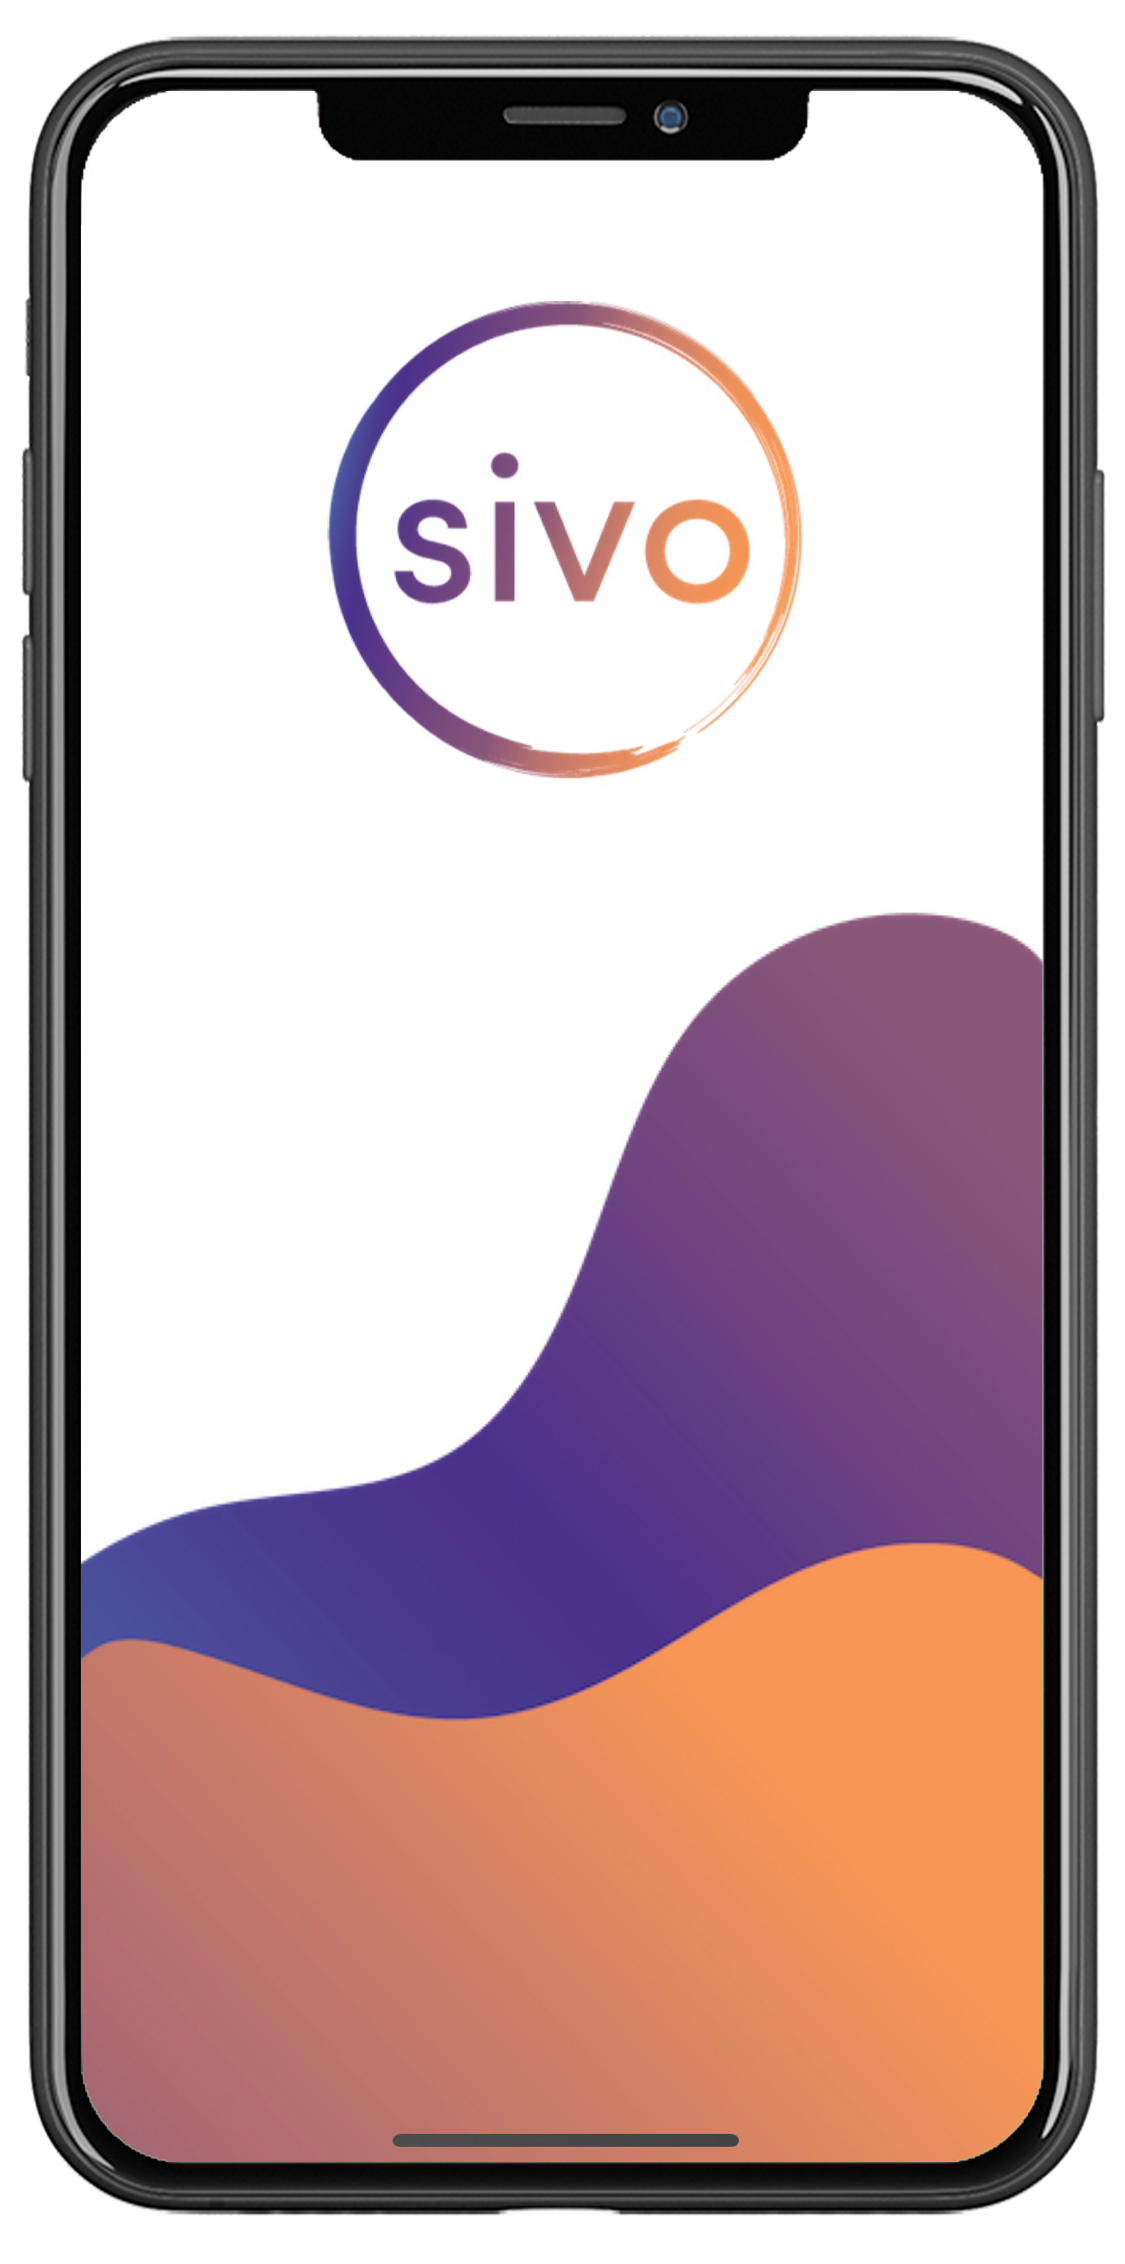 screen image of sivo logo on smartphone screen